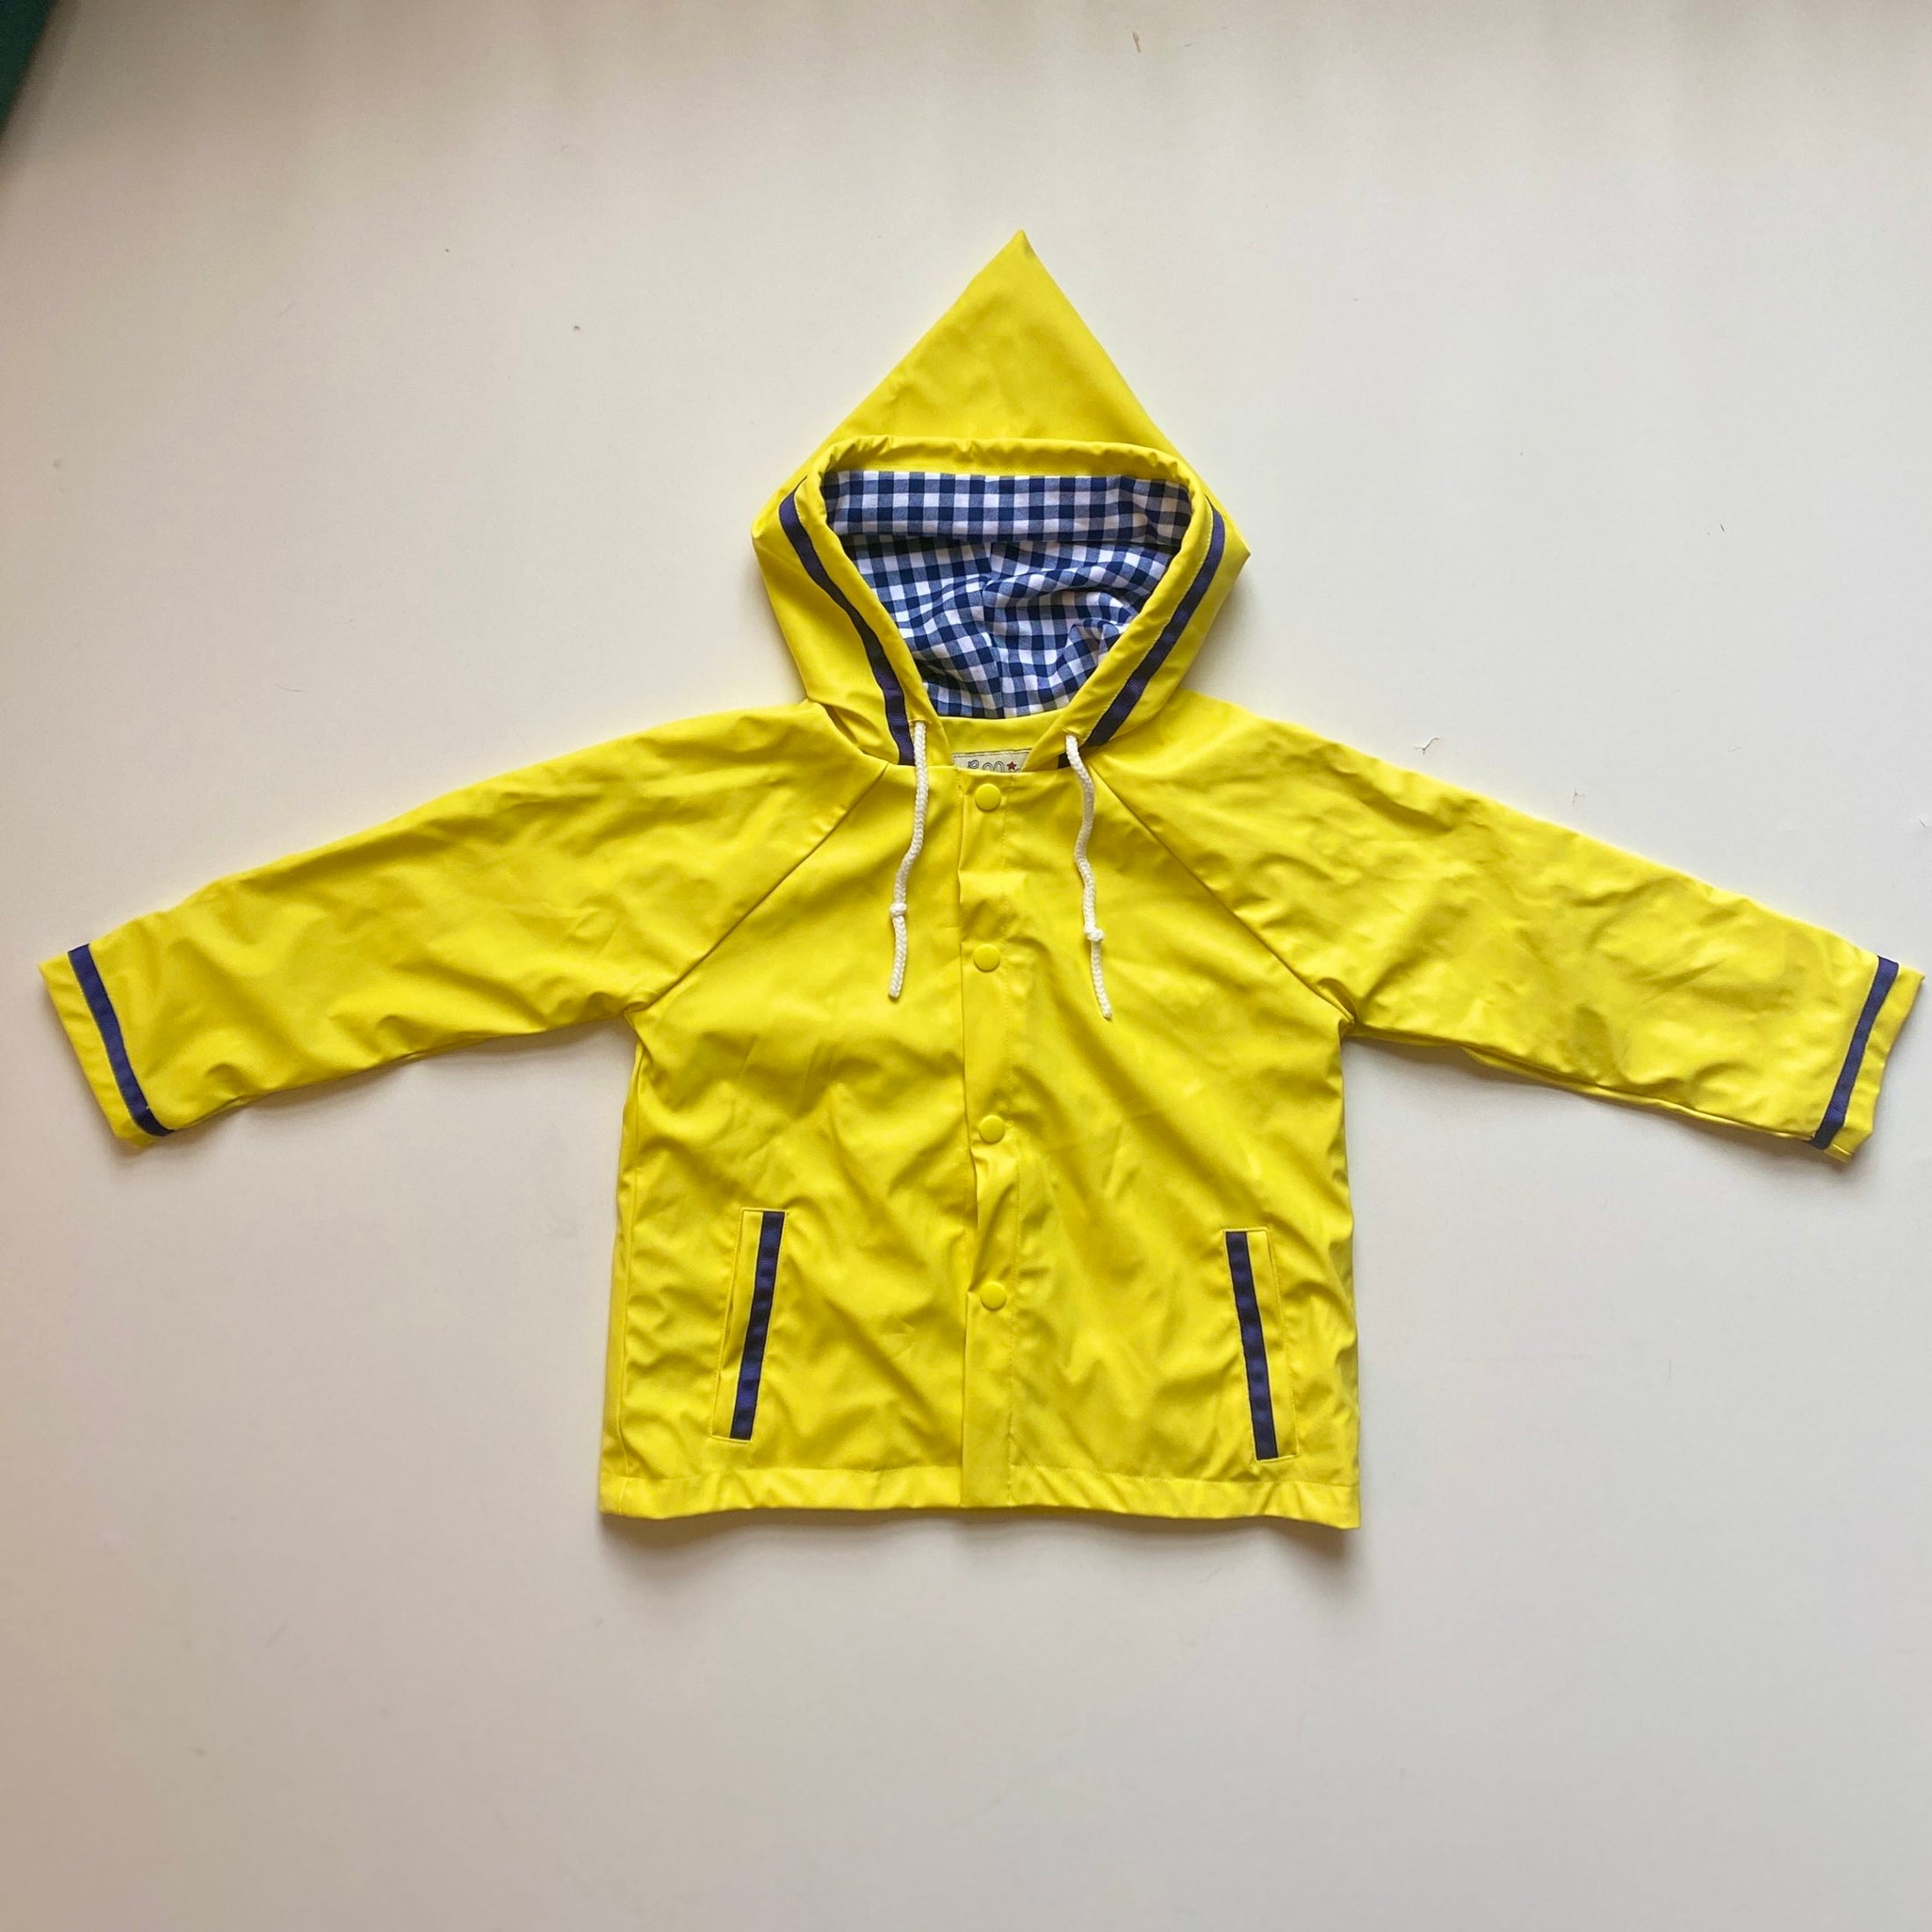 Winston Raincoat - yellow